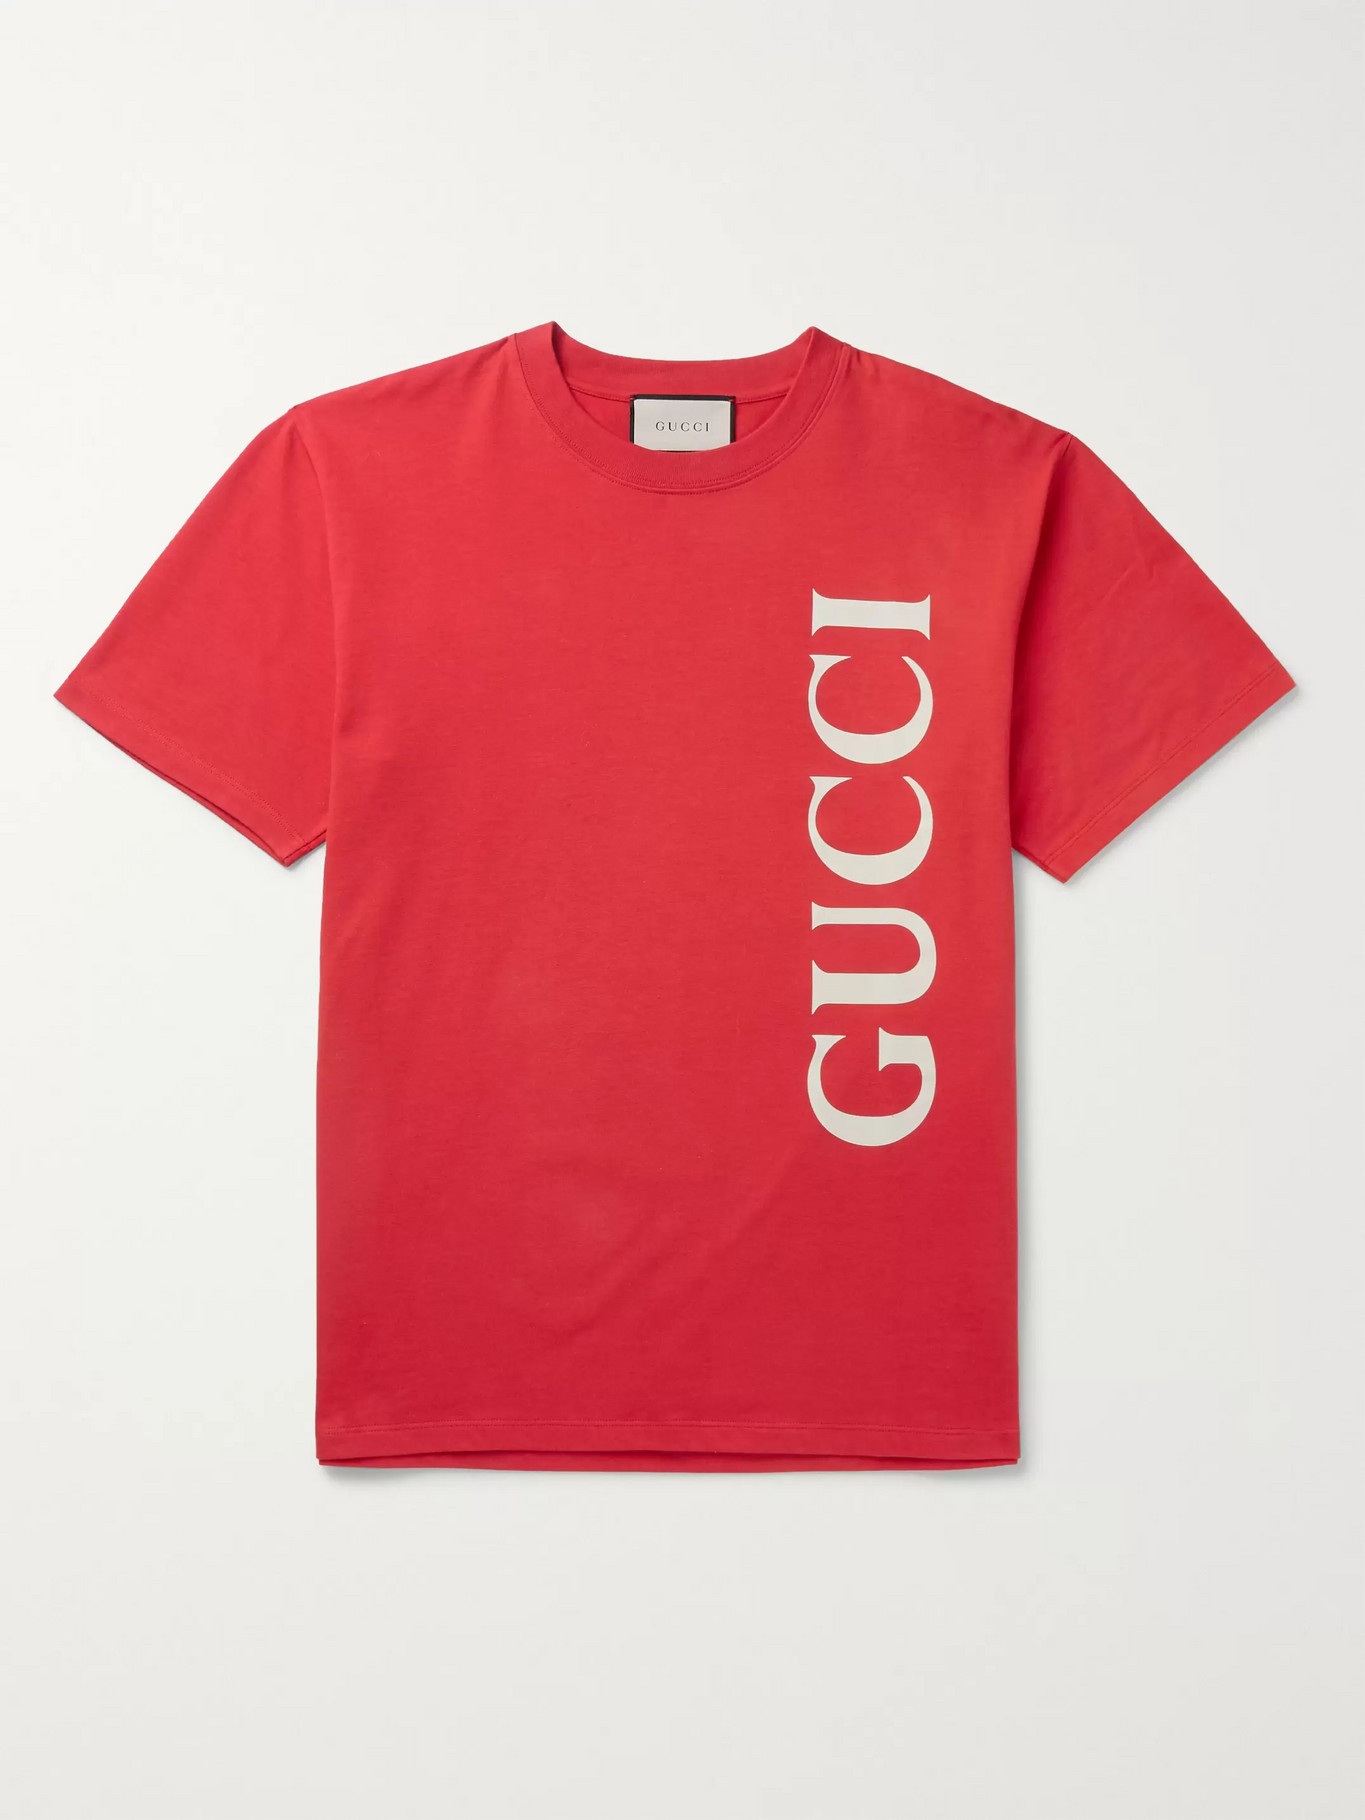 Gucci Shirt Cheap Roblox Mount Mercy University - Roblox Adopt Me Money Codes 2019 August